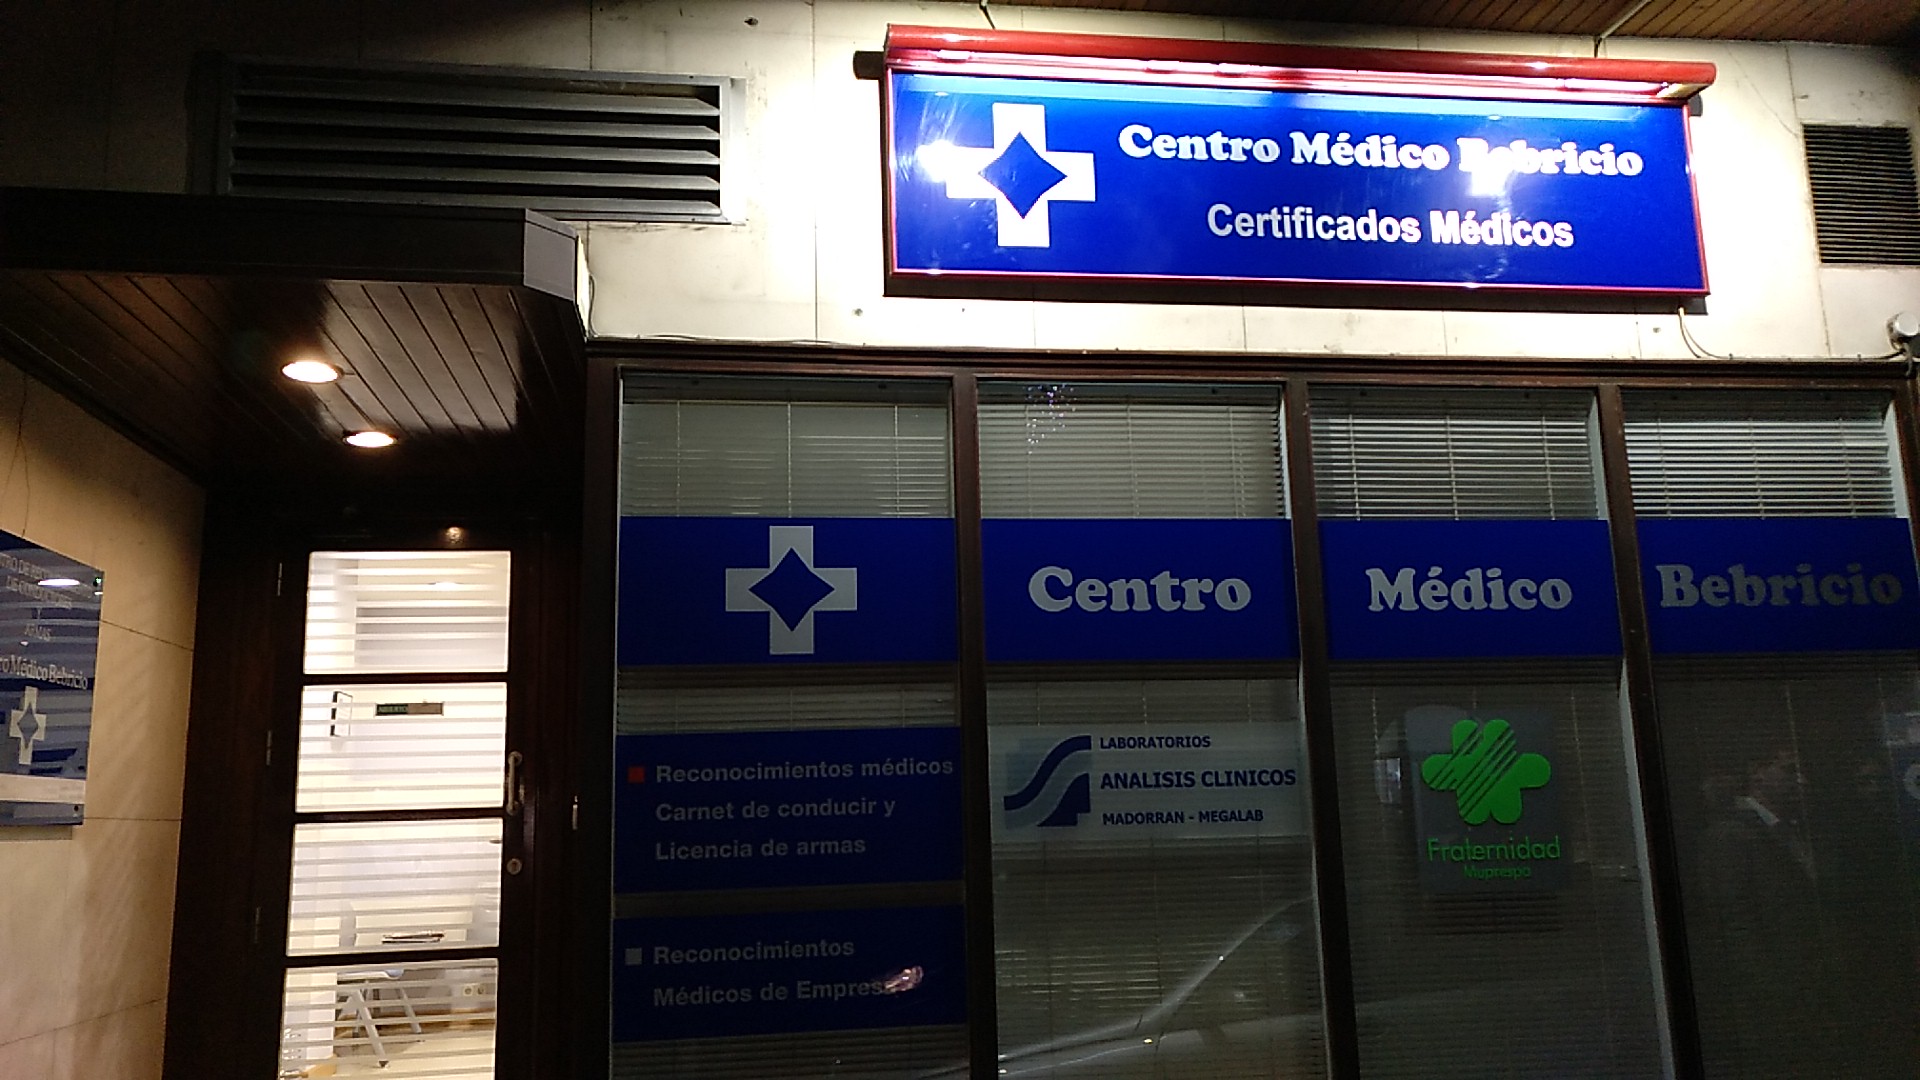 Centro Médico Bebricio